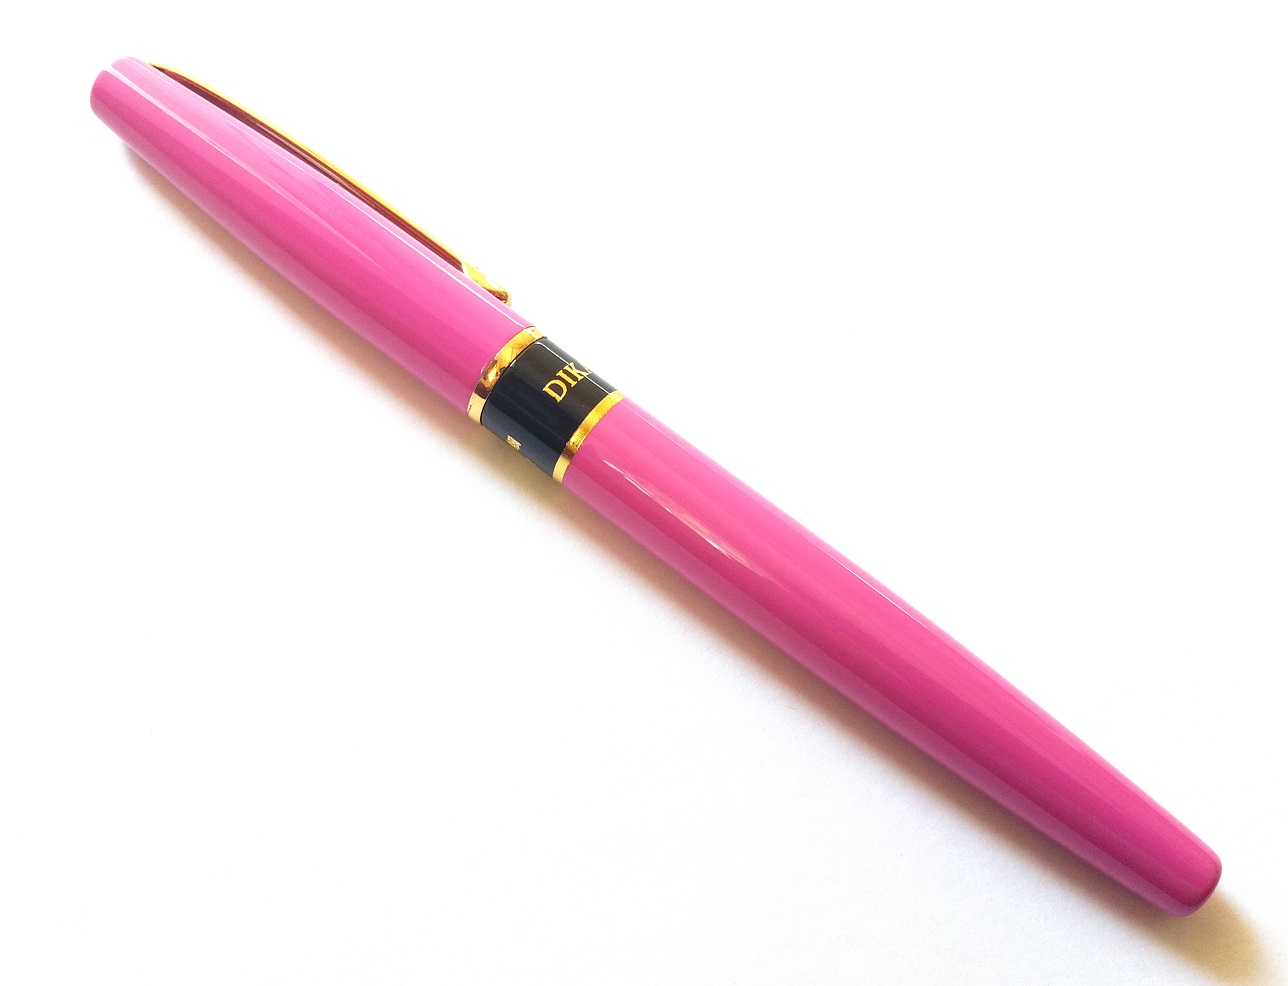 Dikawen 8002 Rose Roller Ball Pen